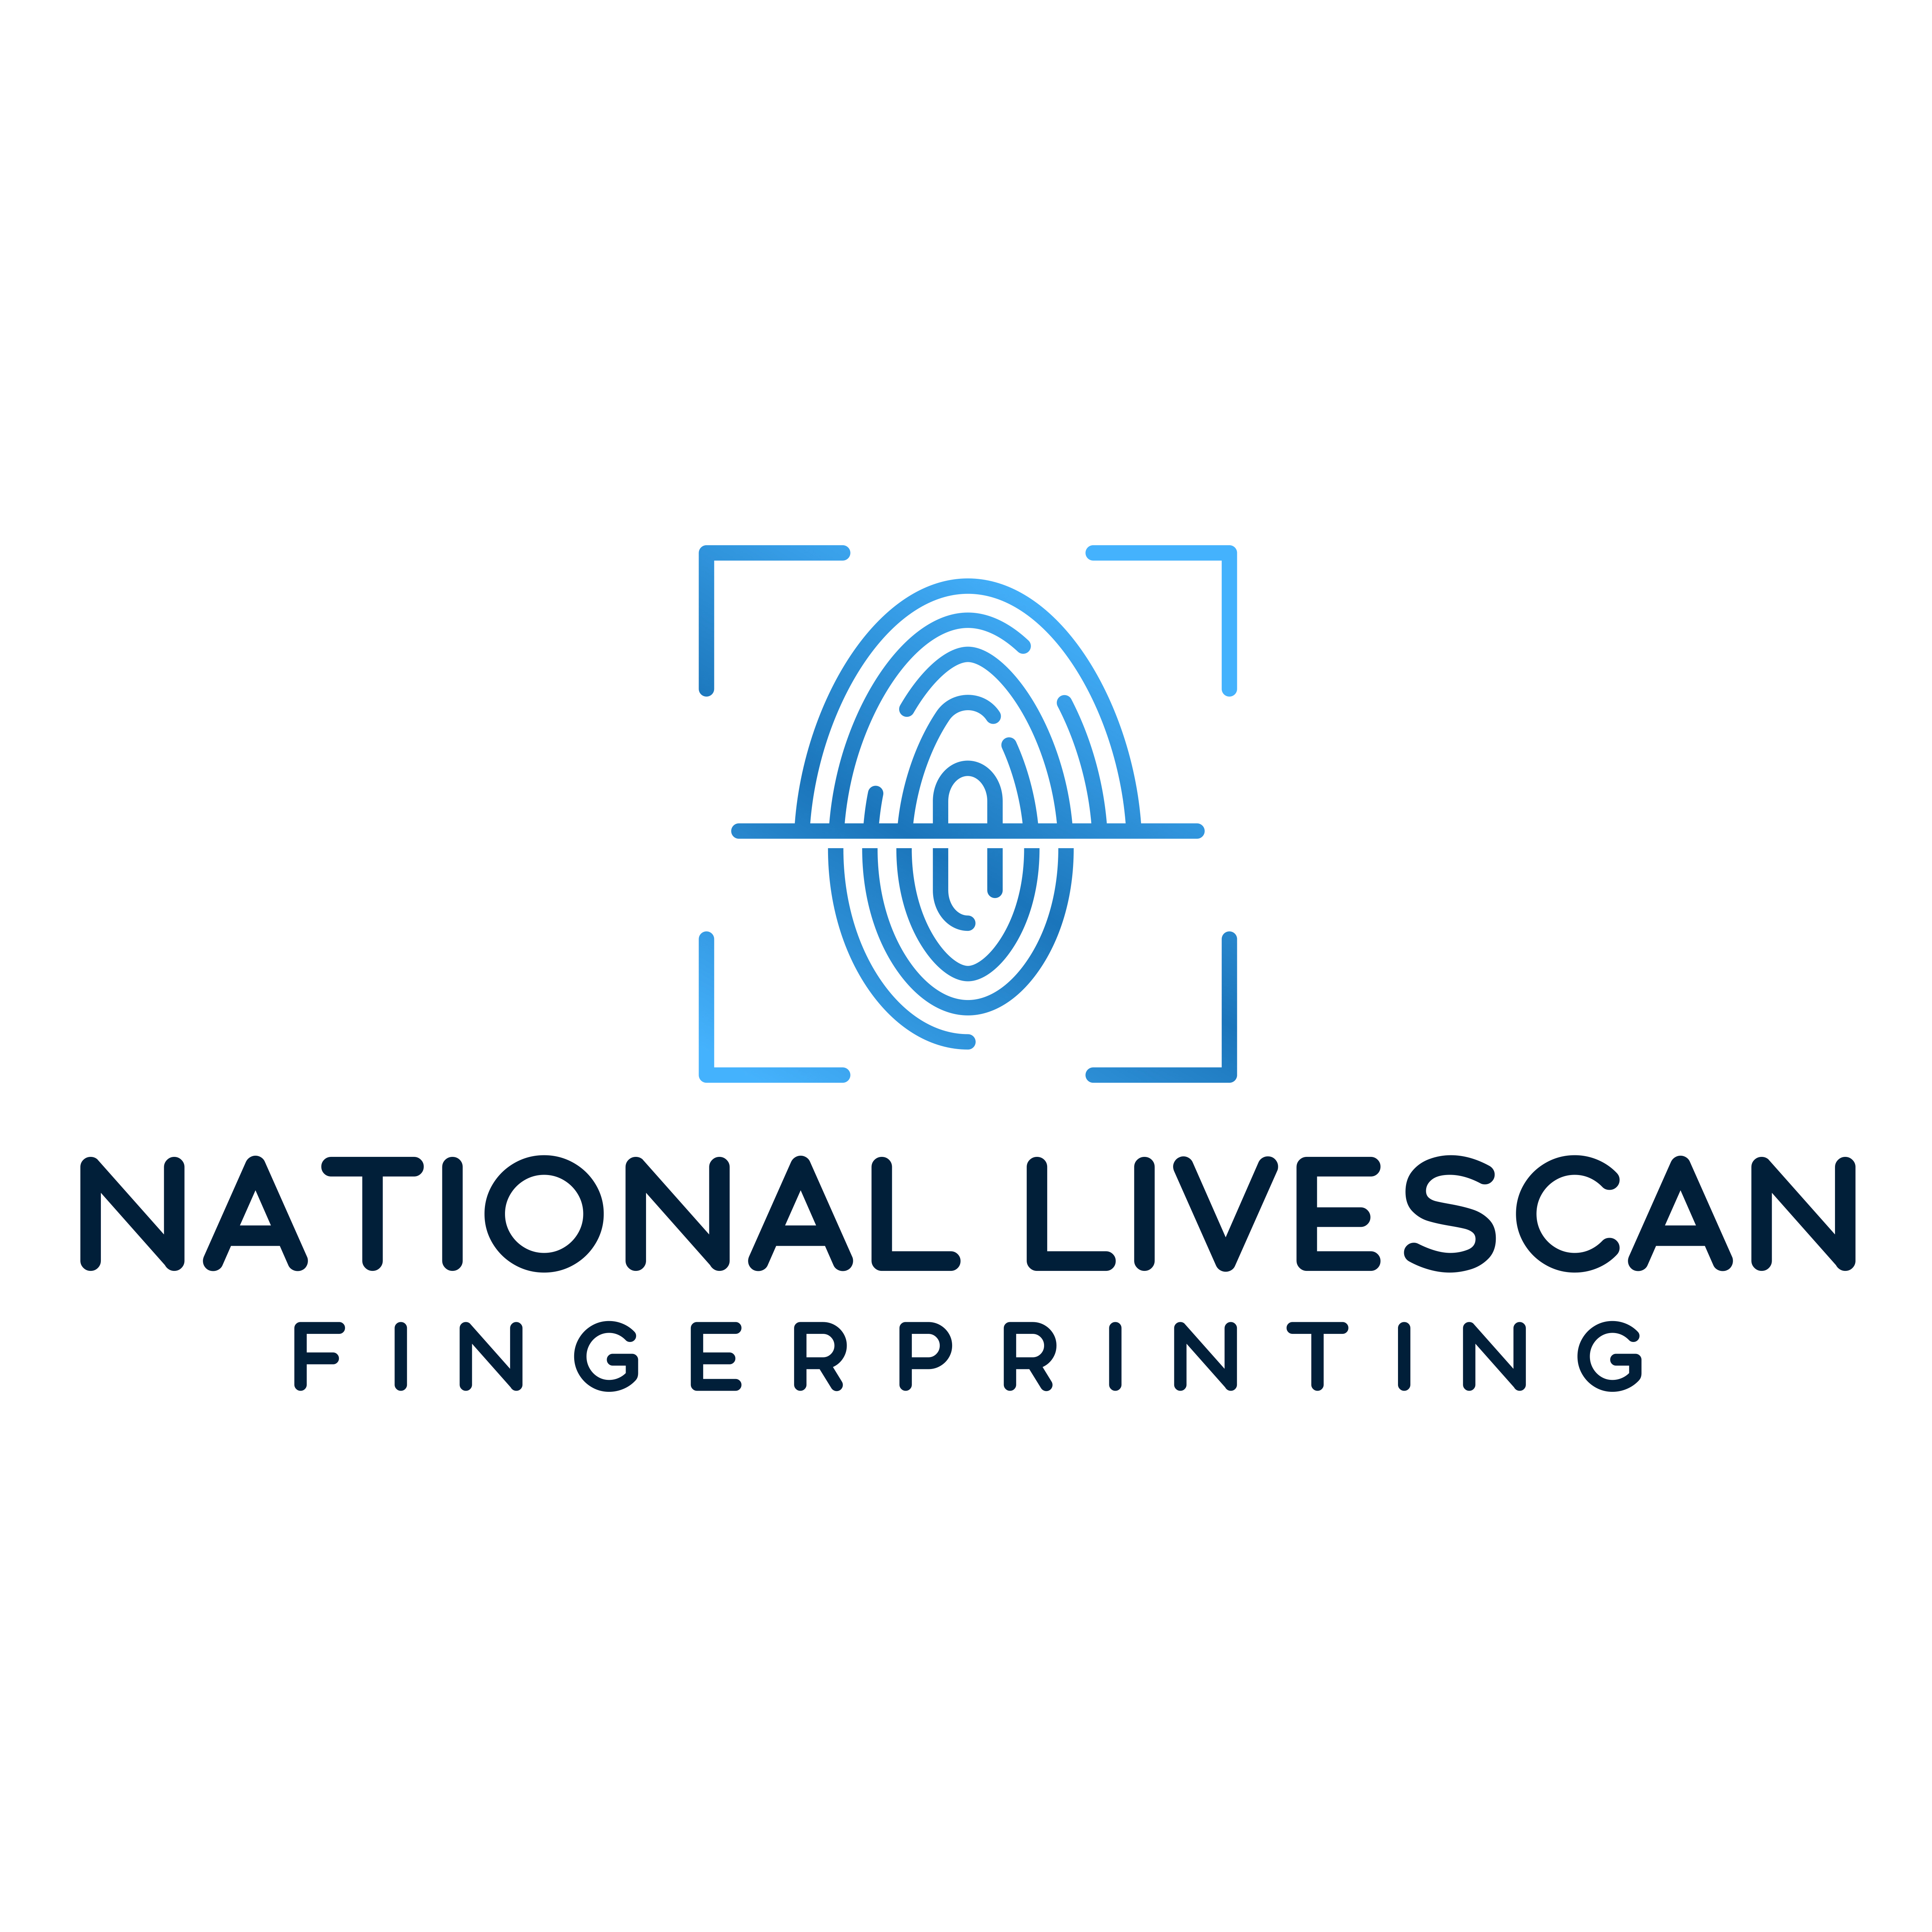 National Livescan Fingerprinting logo